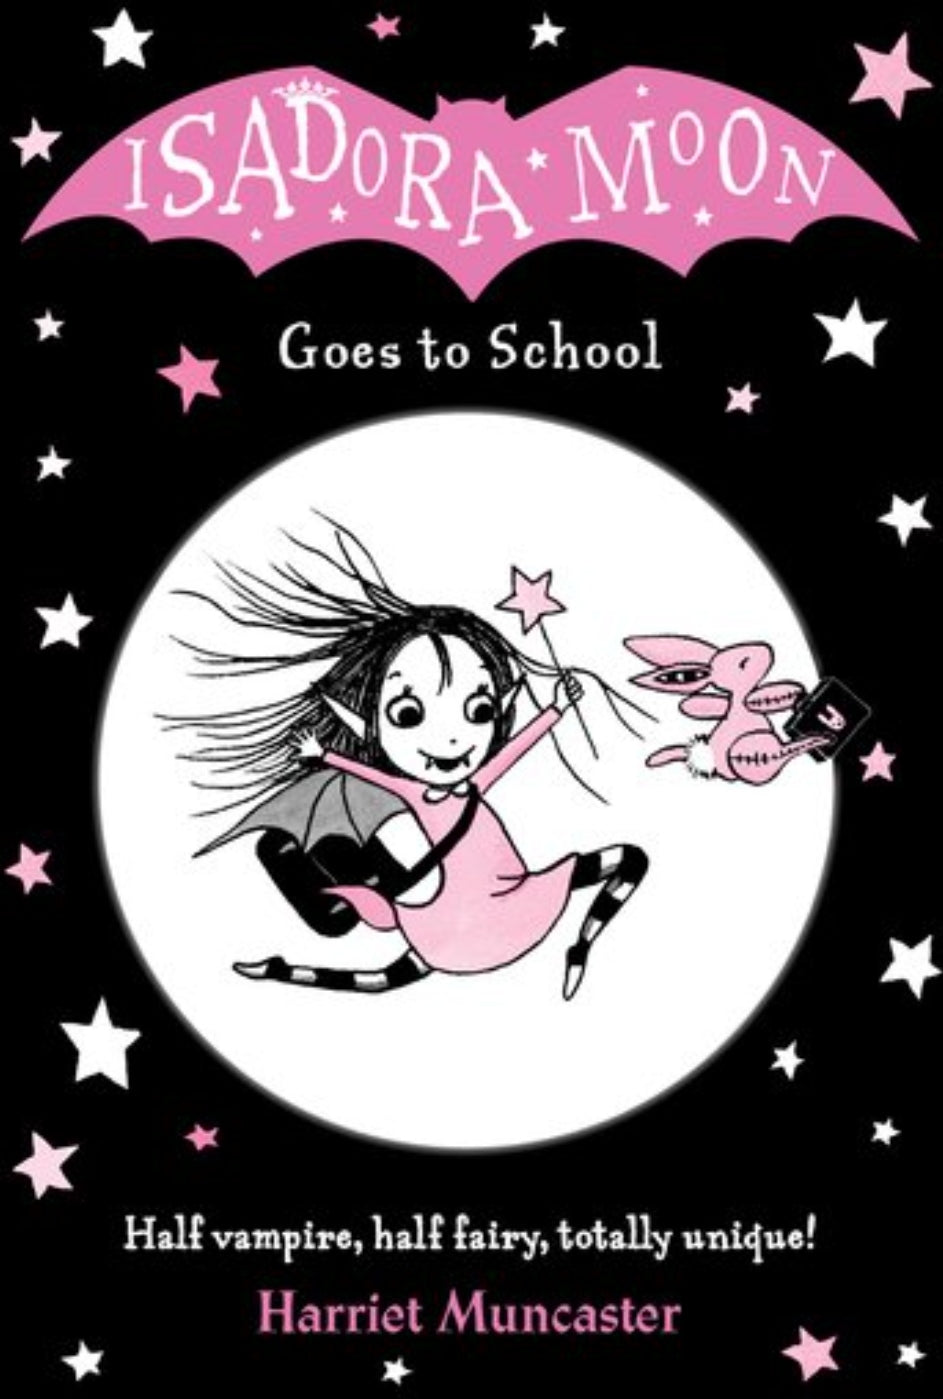 Isadora Moon goes to School